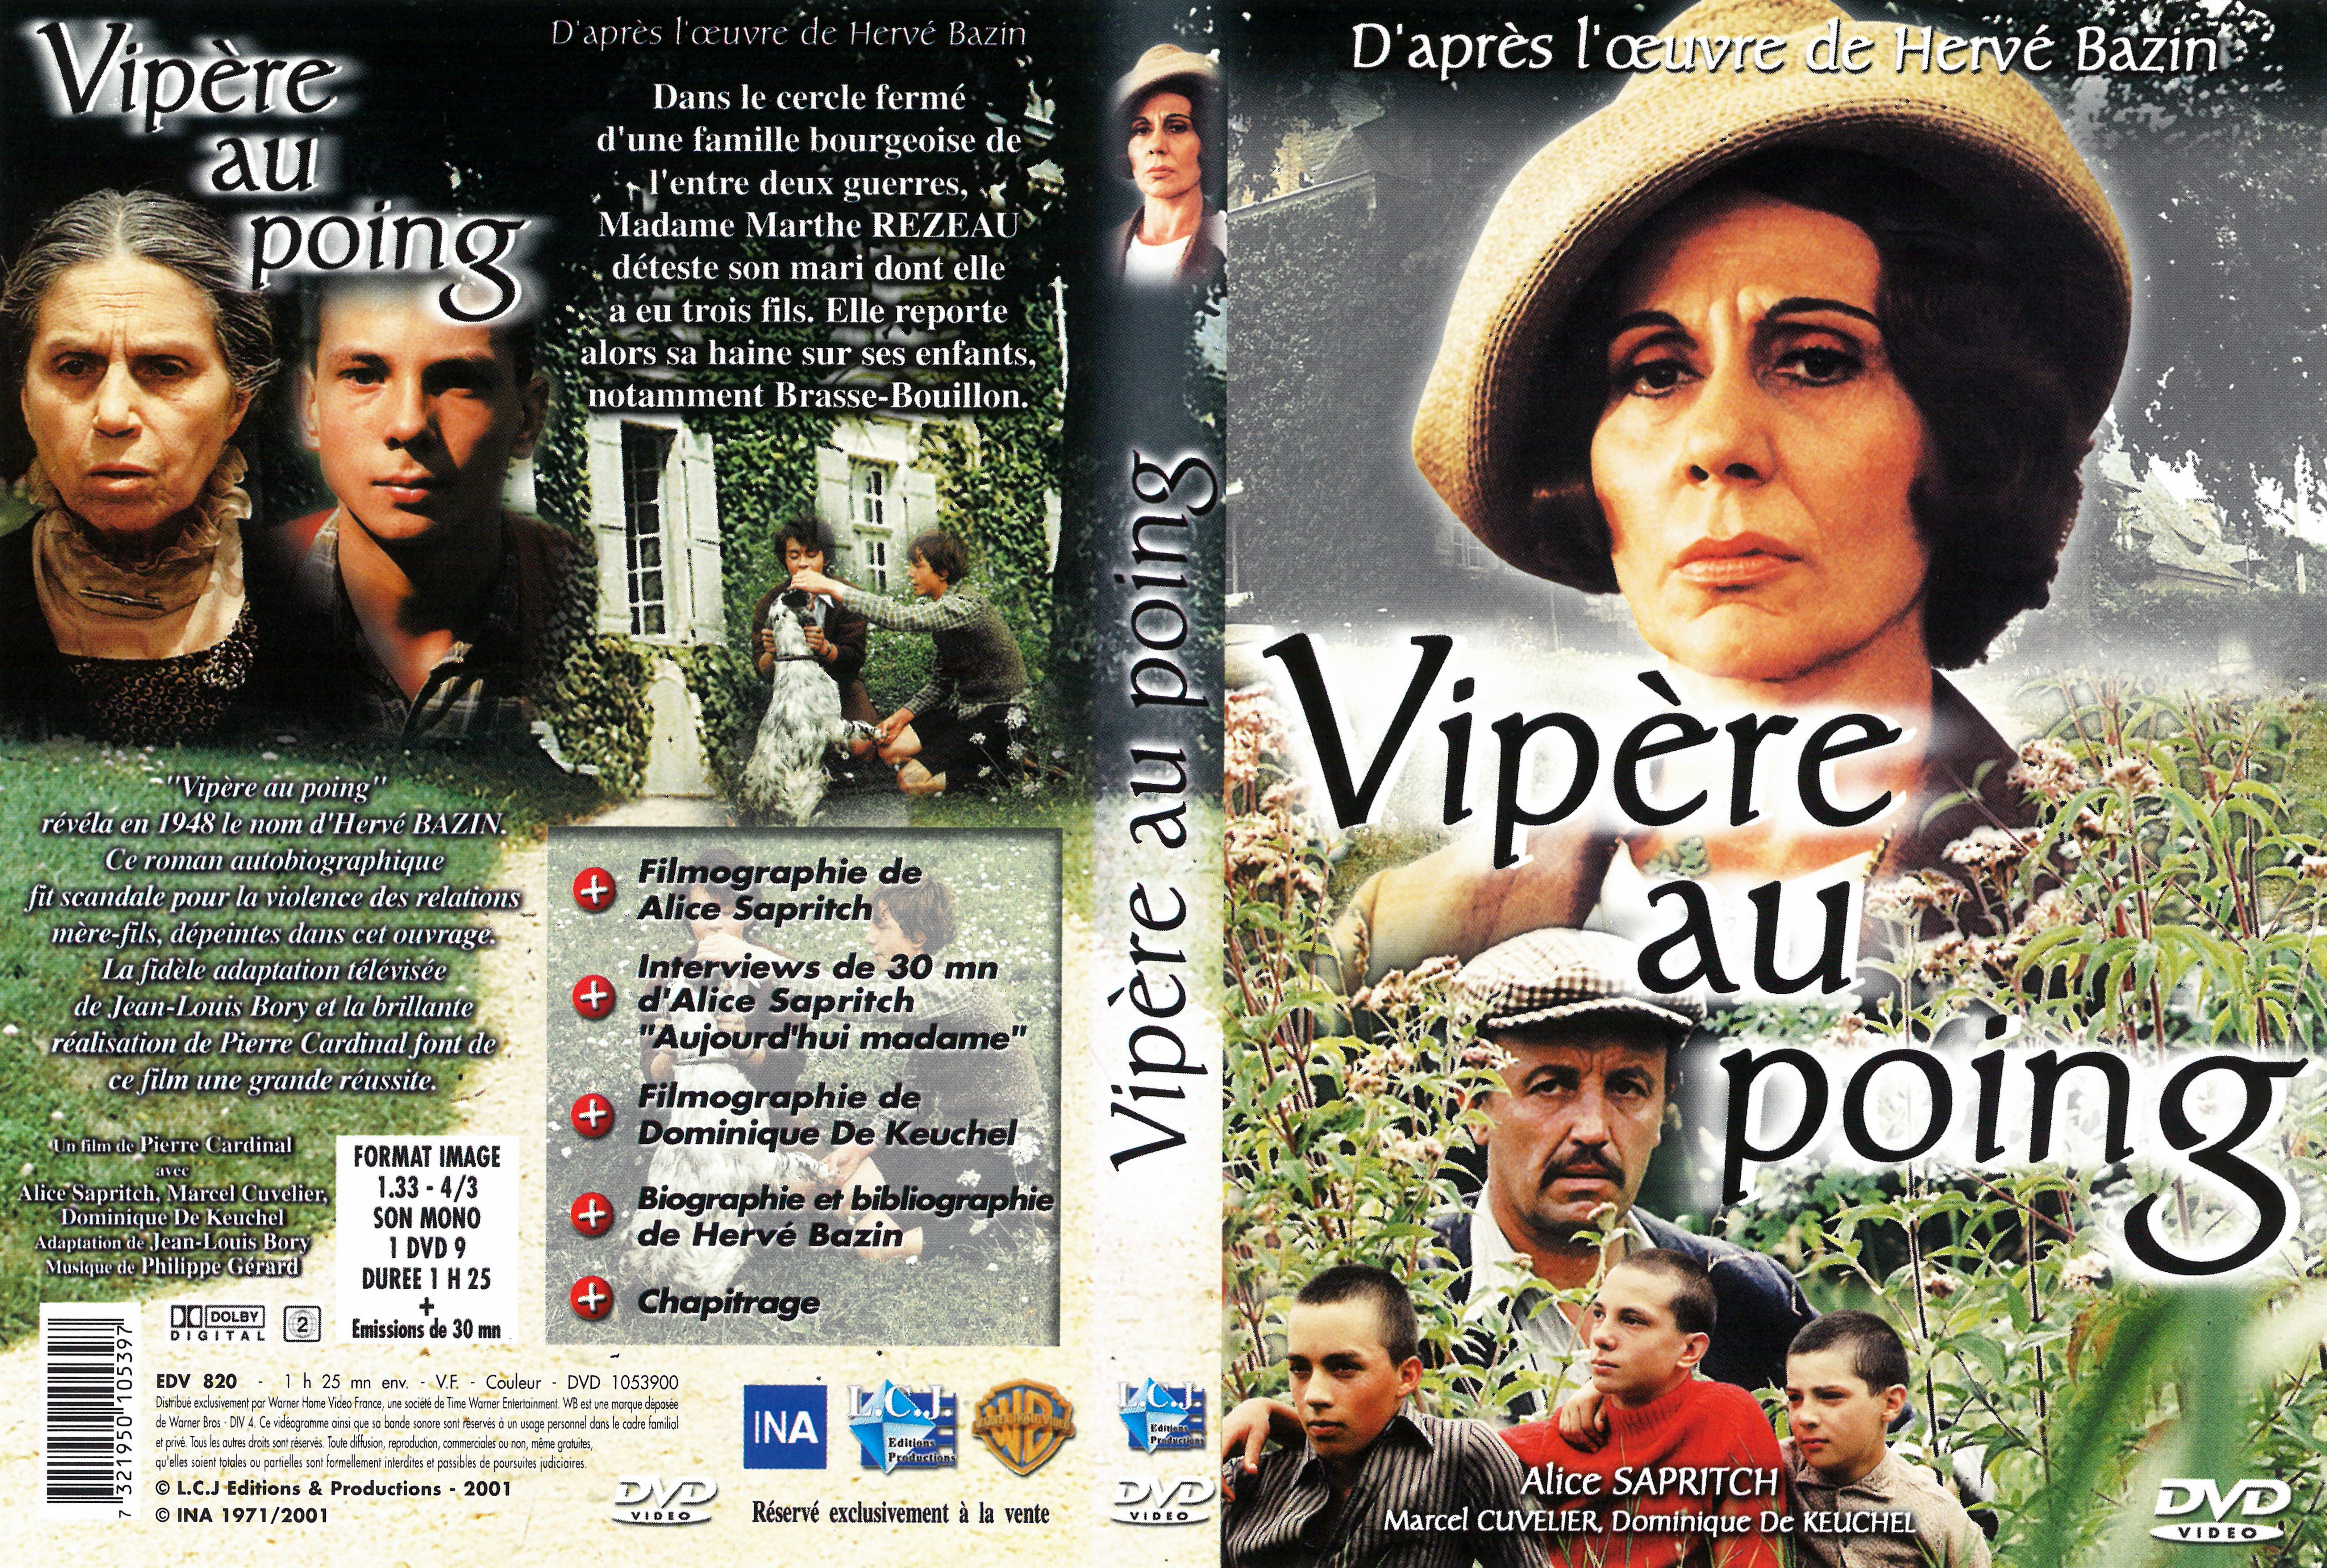 Jaquette DVD Vipre au poing (Alice Sapritch)